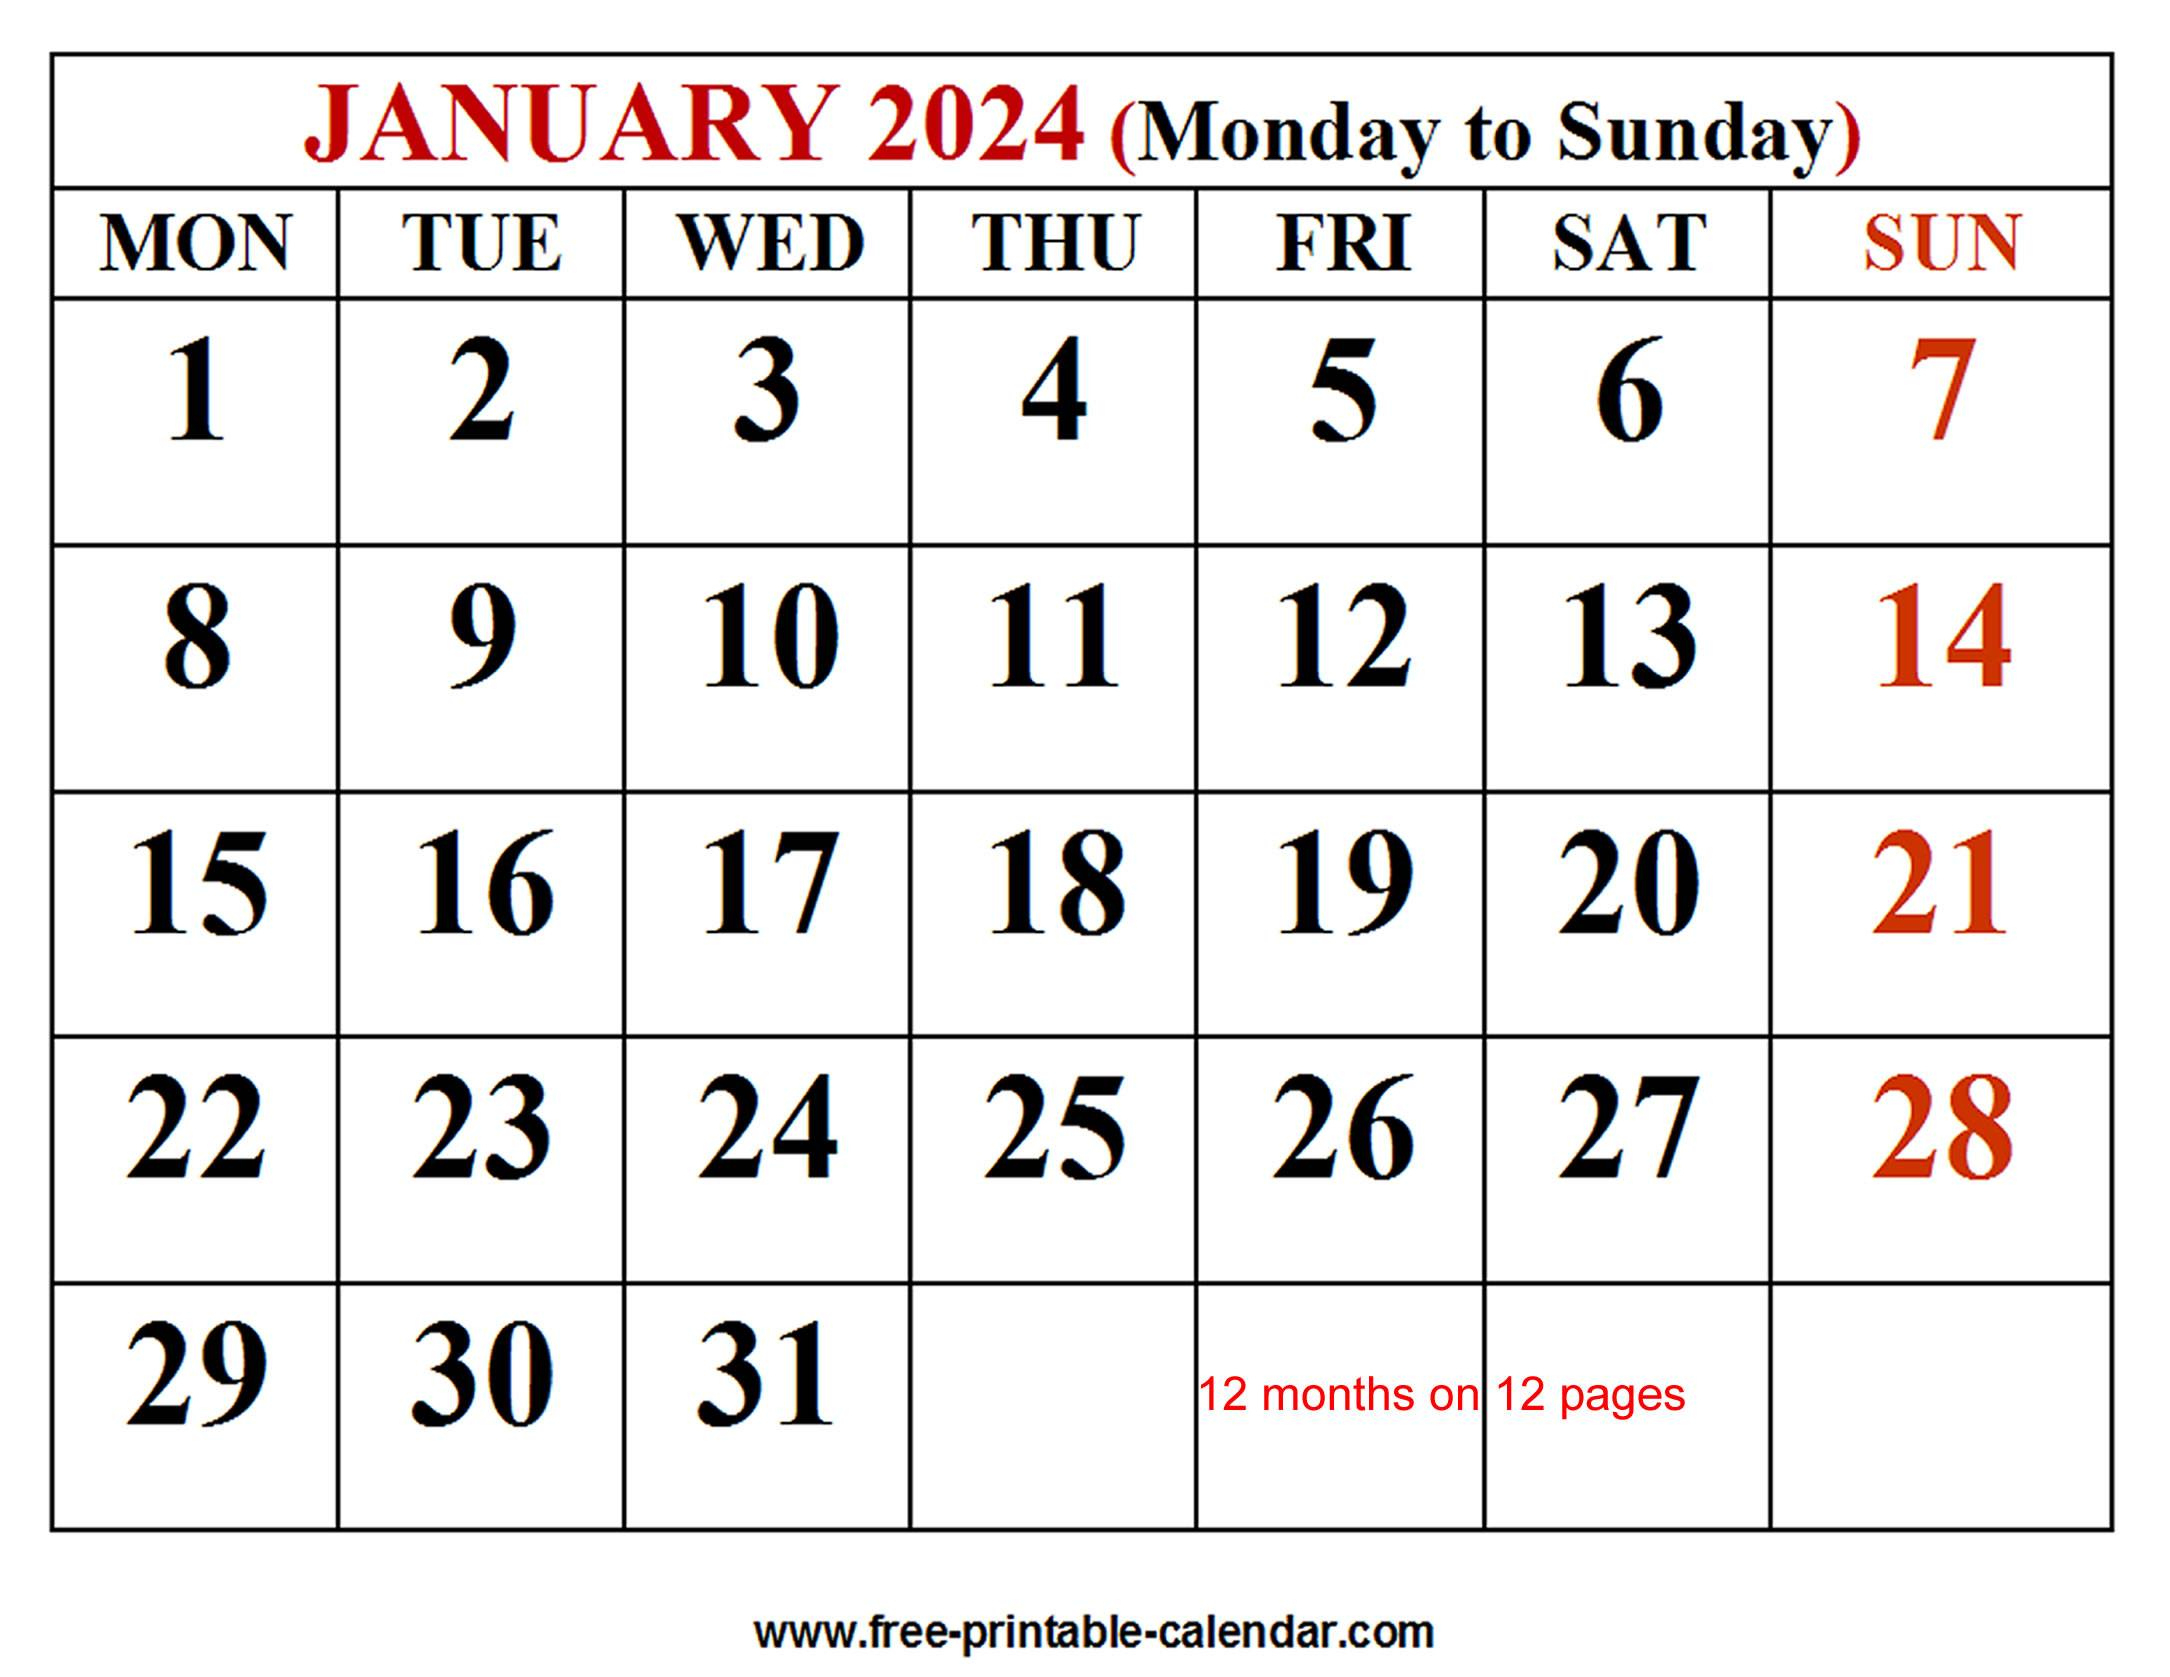 2024 Calendar Template - Free-Printable-Calendar | Free Printable Calendar 2024 Two Months Per Page